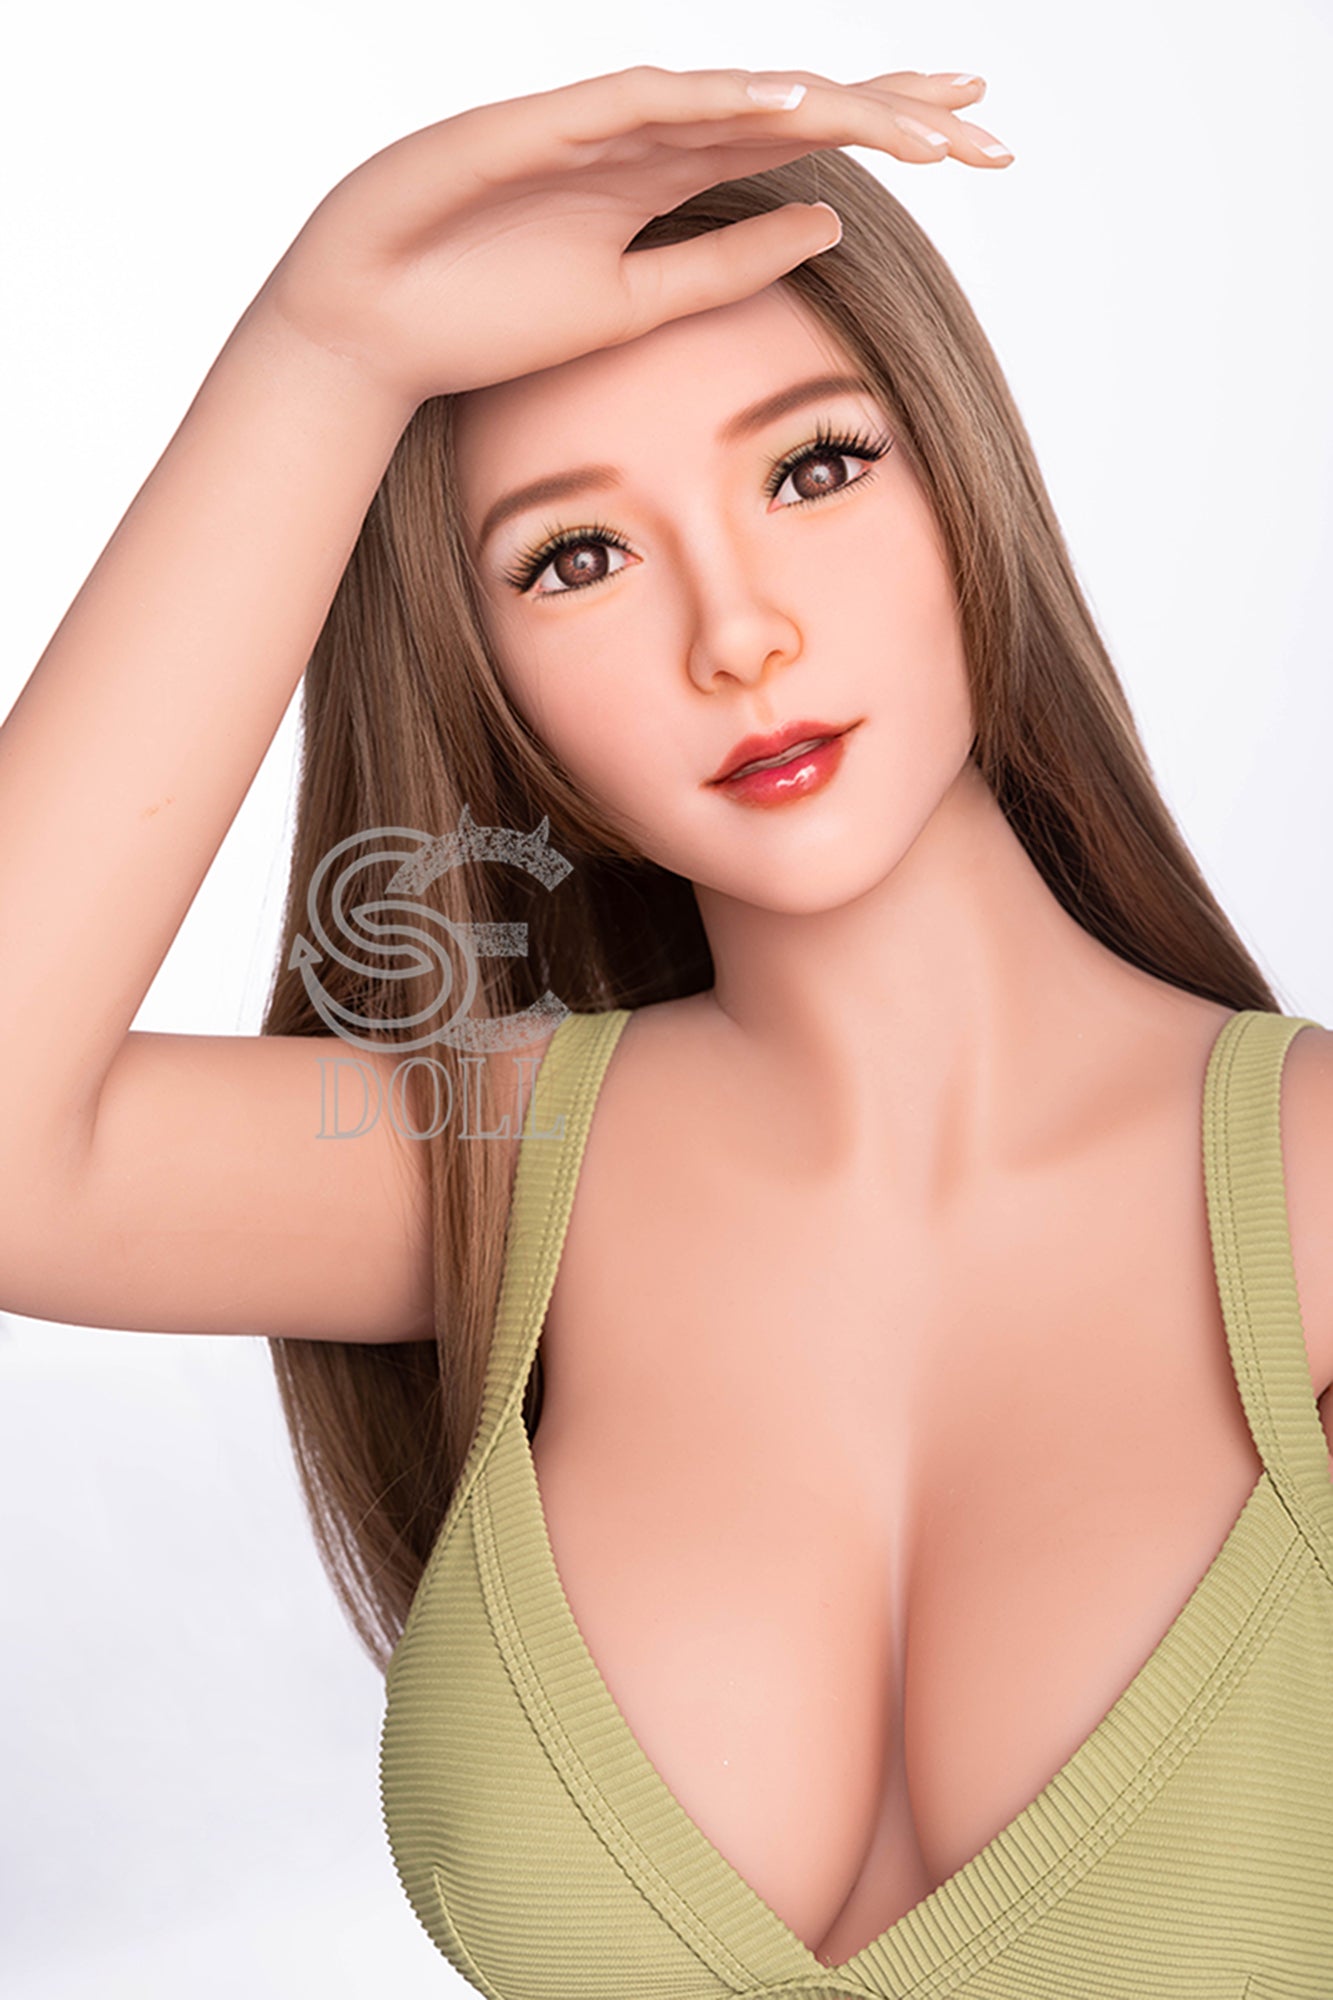 SEDOLL 161 cm F TPE - Lulu | Buy Sex Dolls at DOLLS ACTUALLY